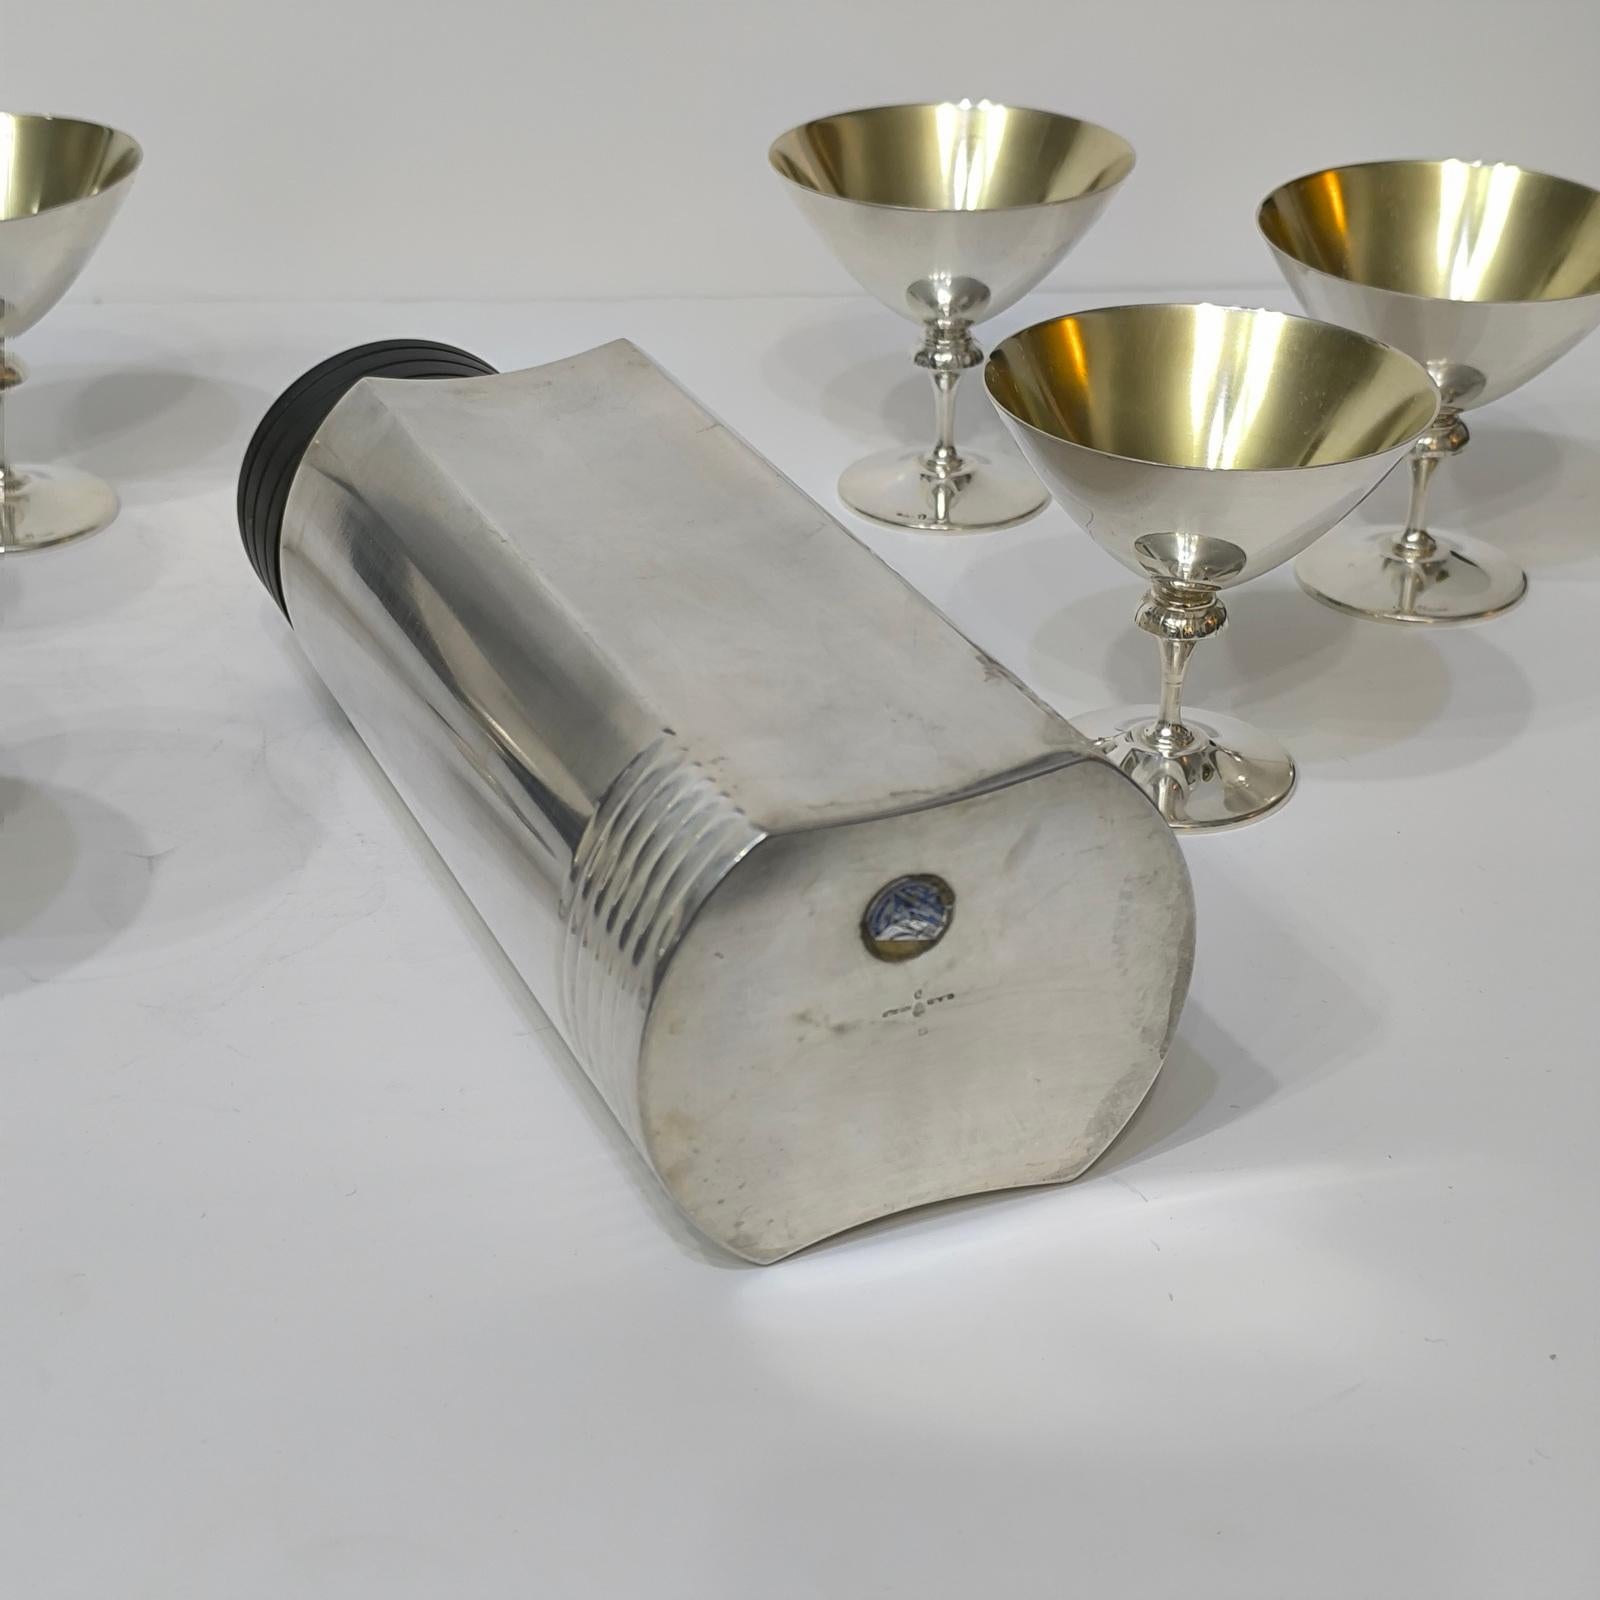 Art Deco Cocktail Shaker with 6 Martini Glasses by Folke Arström, Sweden For Sale 6